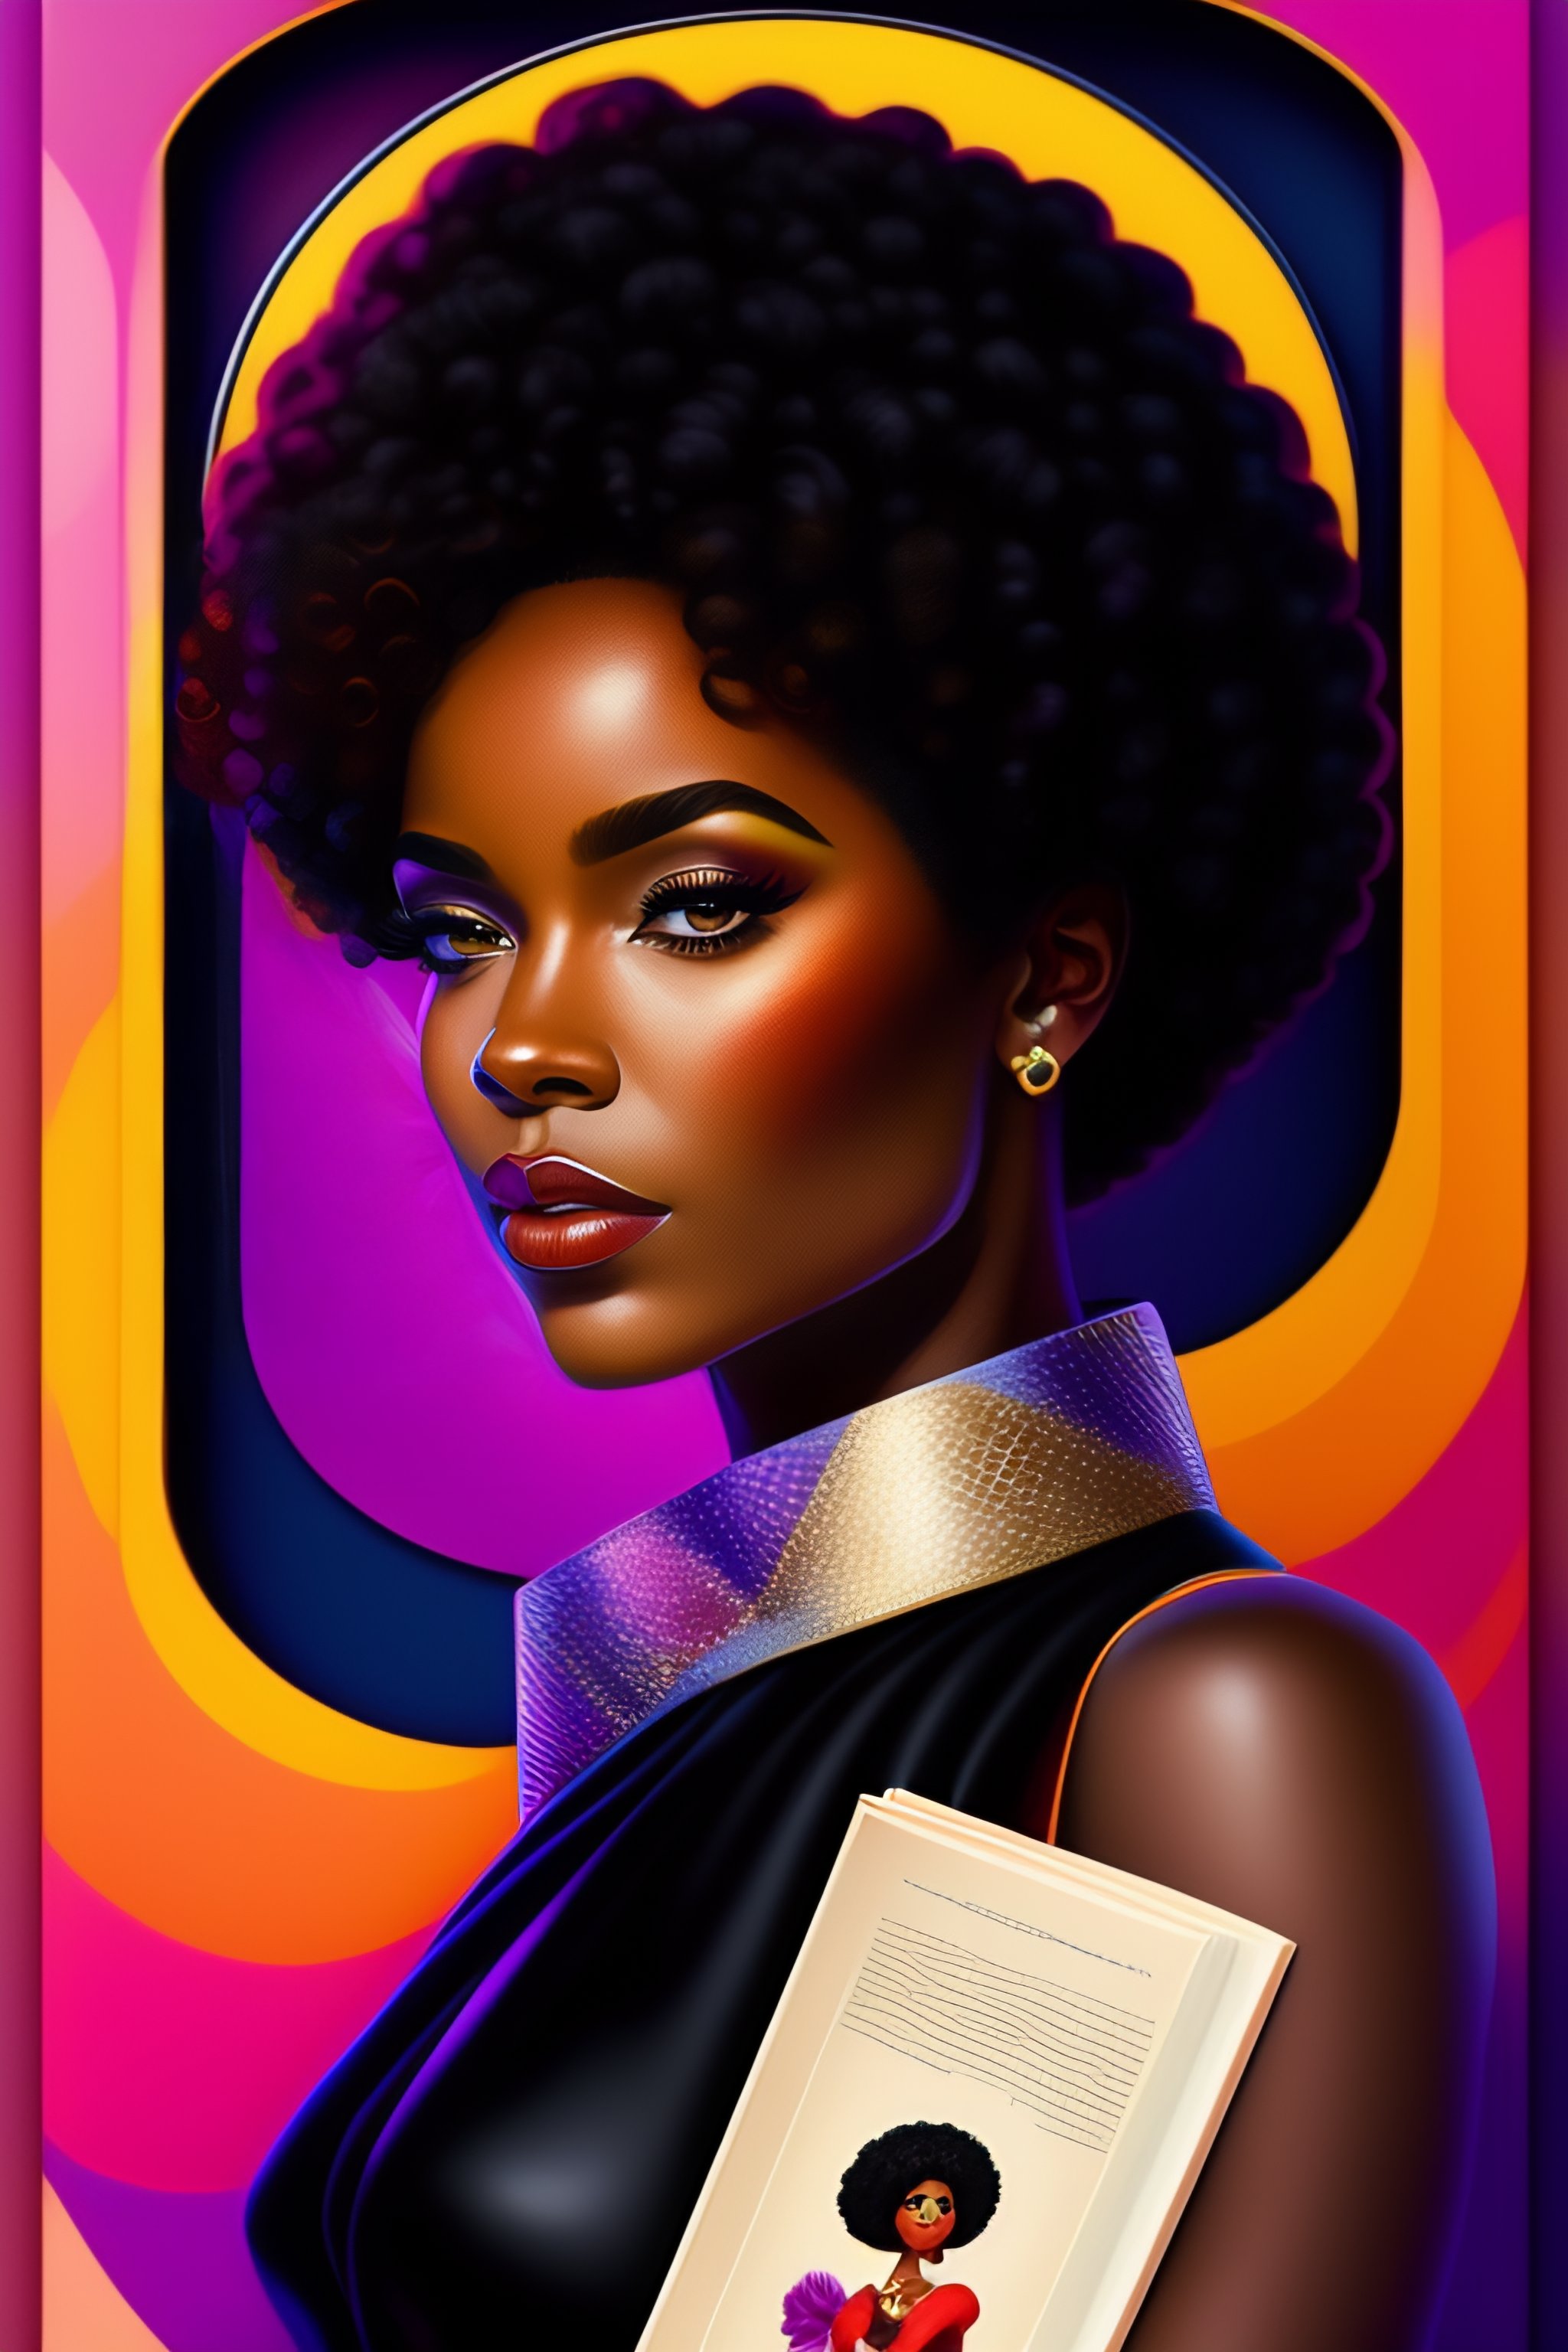 black women afro art